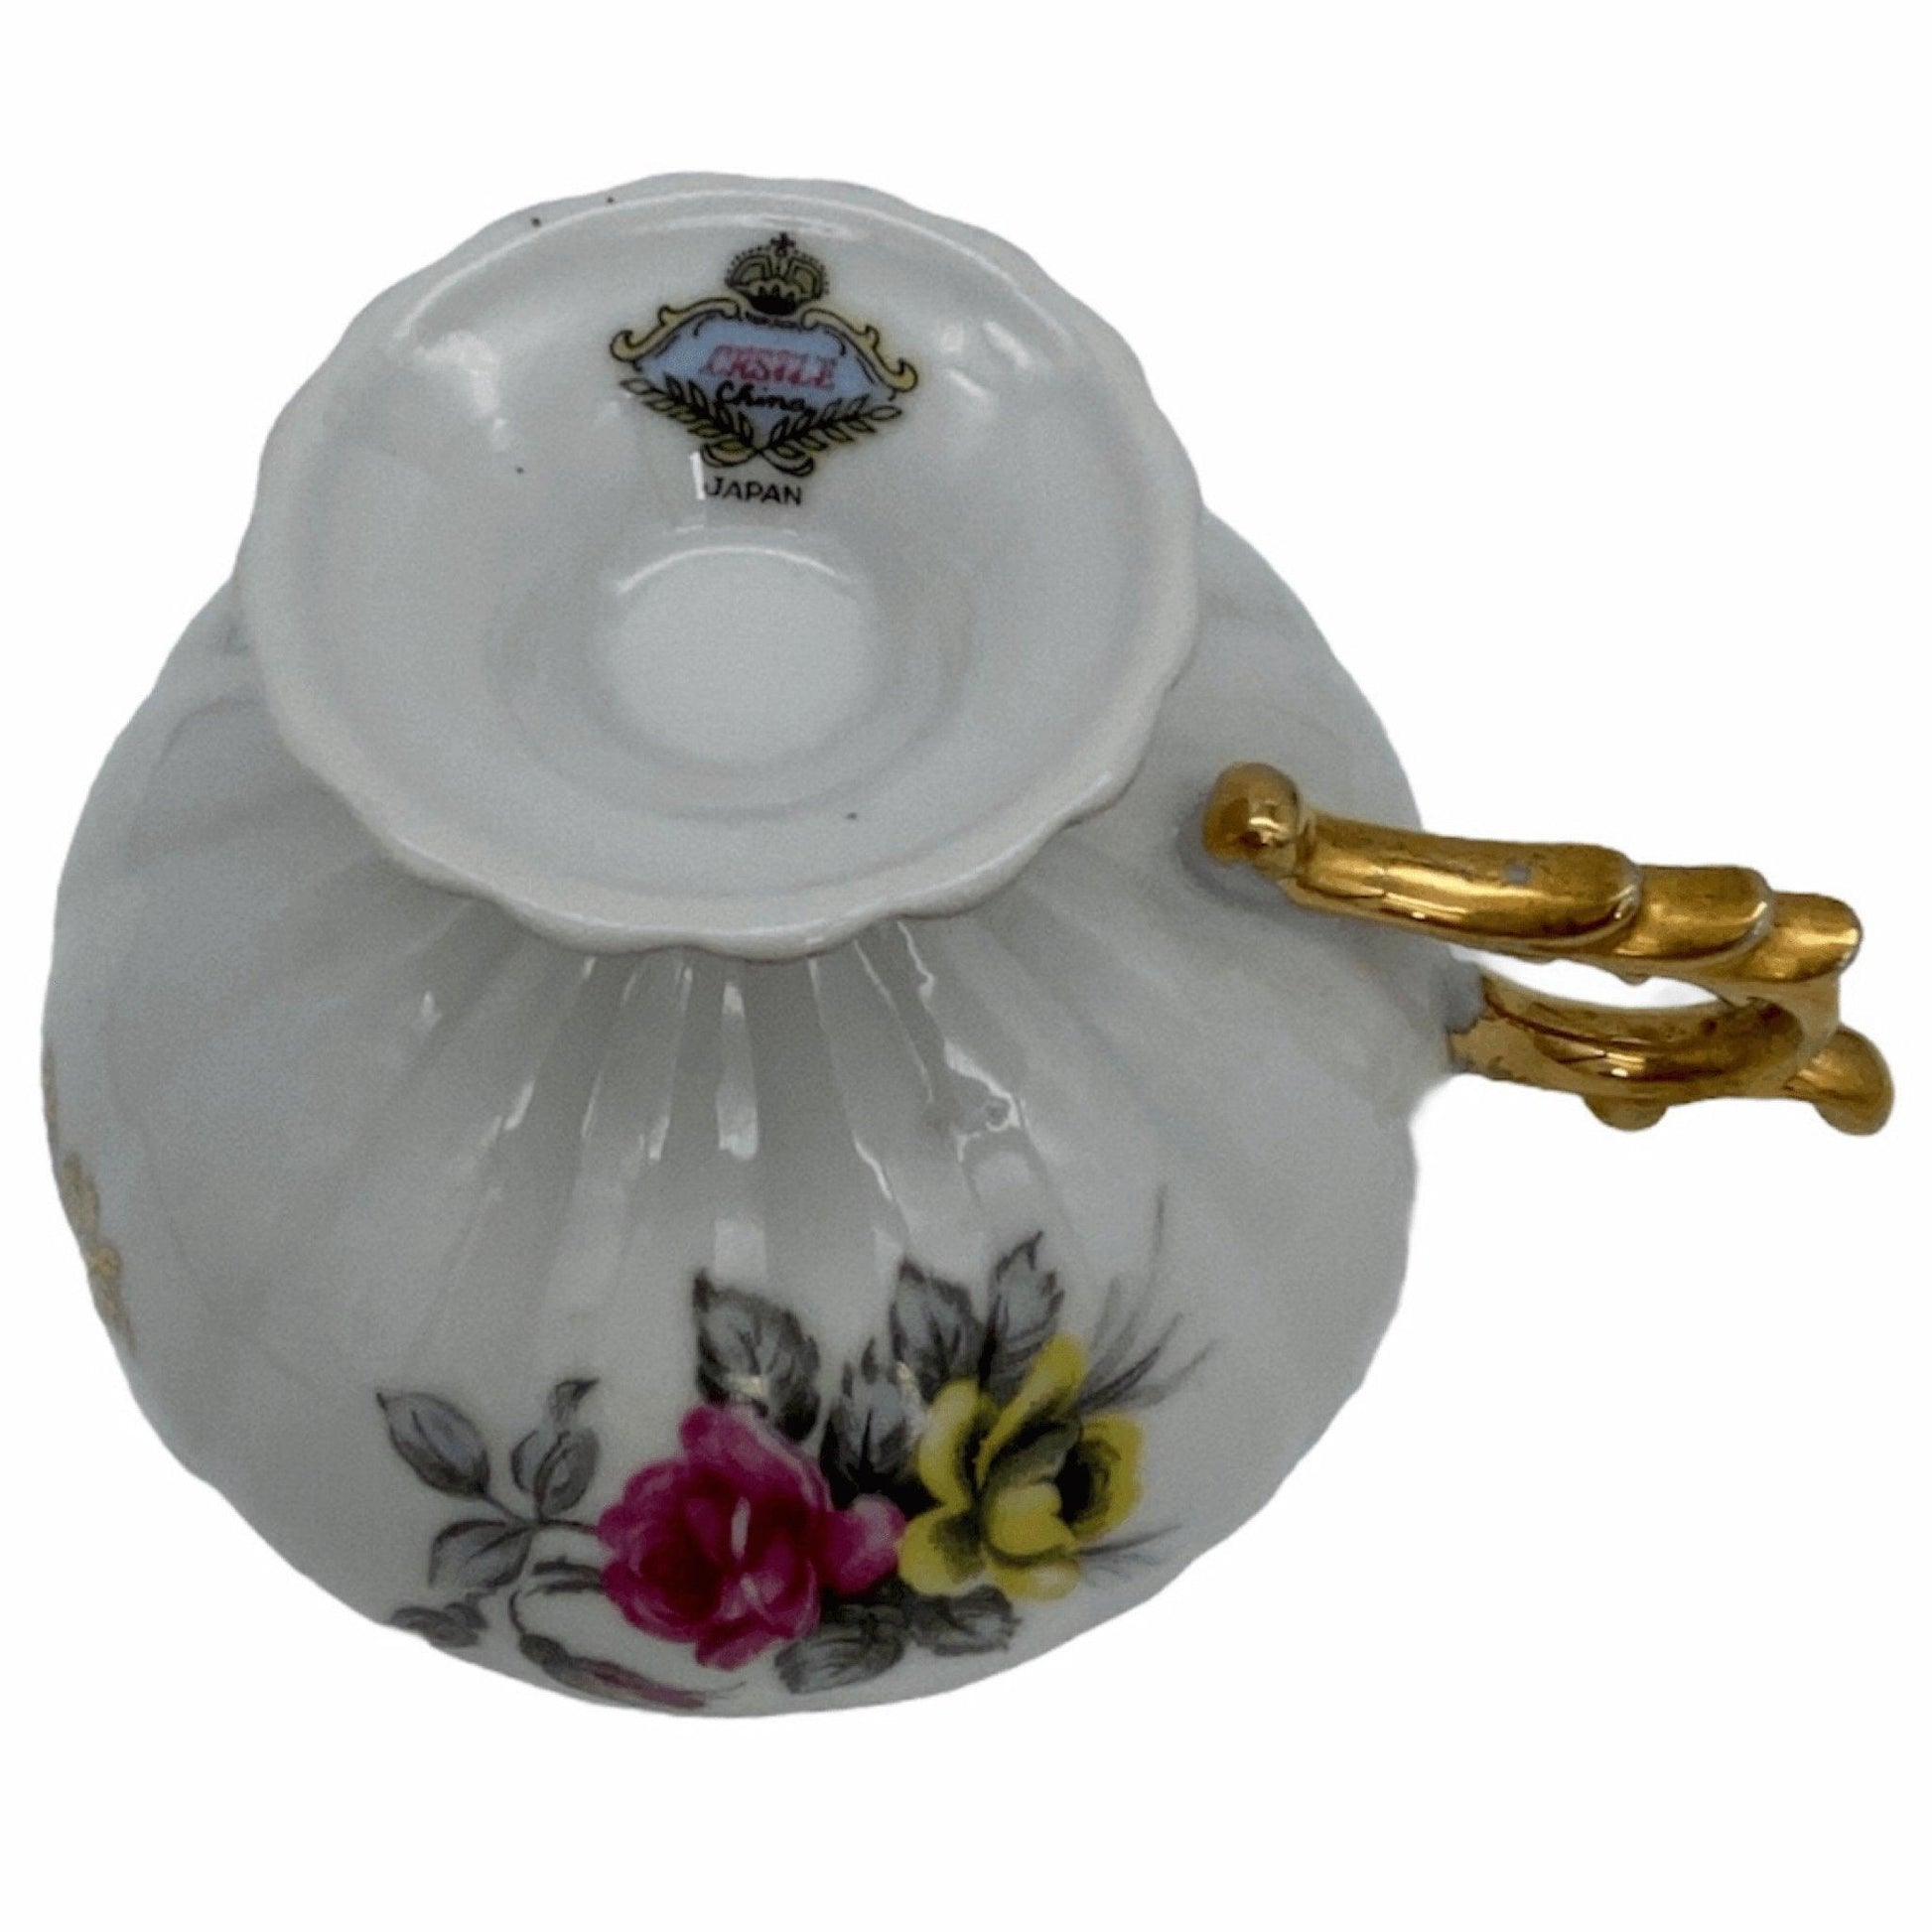 Castle Aristocrat Vintage China Pedestal Teacup Saucer Set